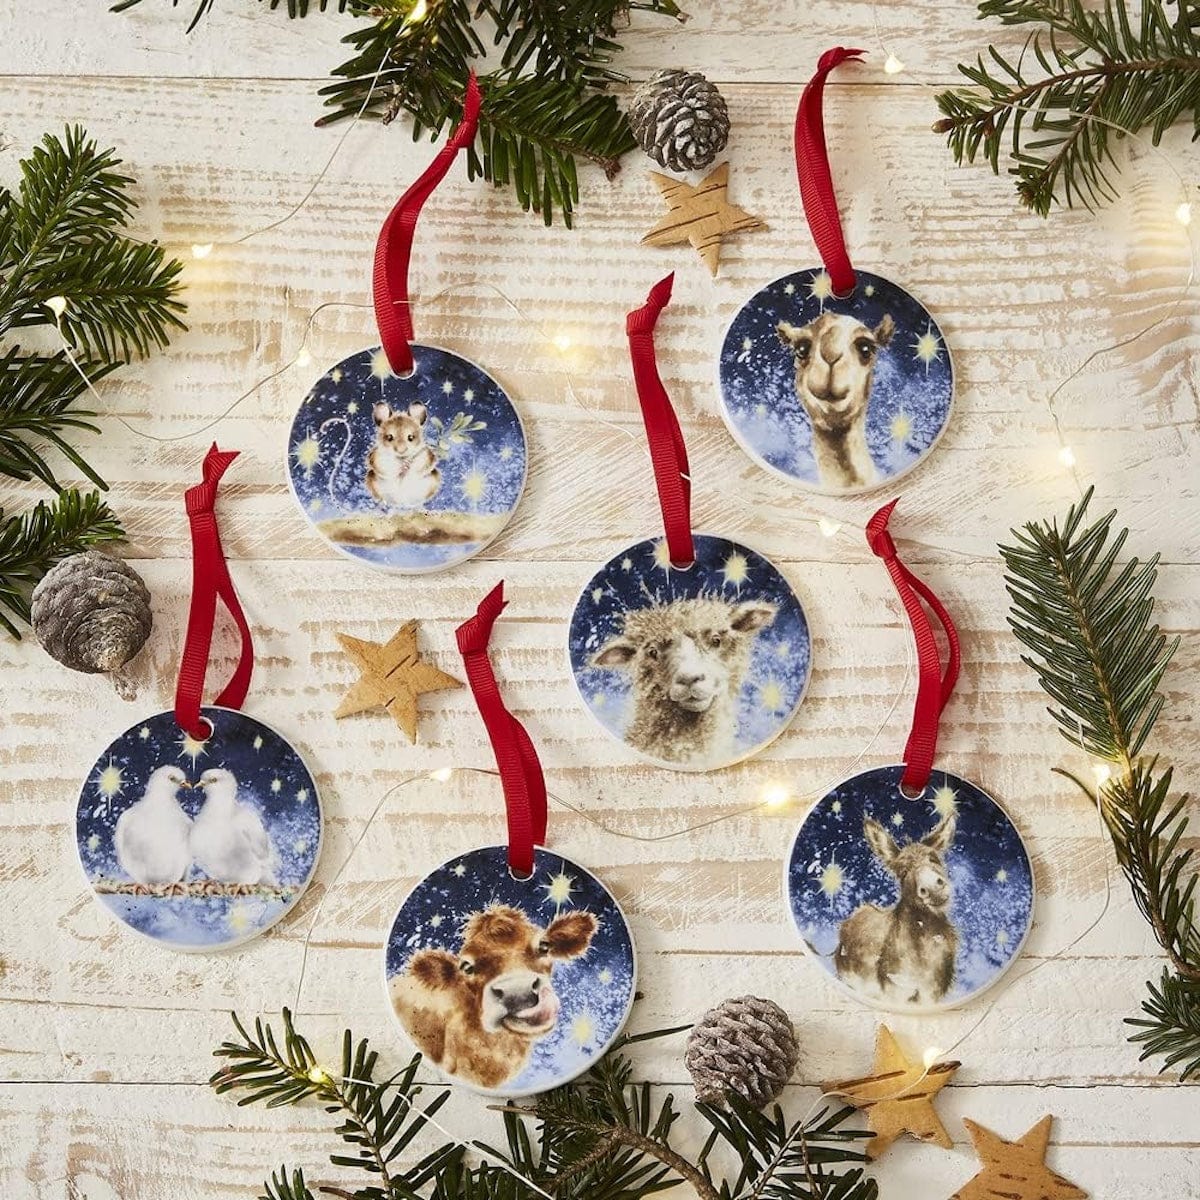 Wrendale Designs Christmas Decorations Set of 6 Nativity Animal Bone China Christmas Tree Decorations